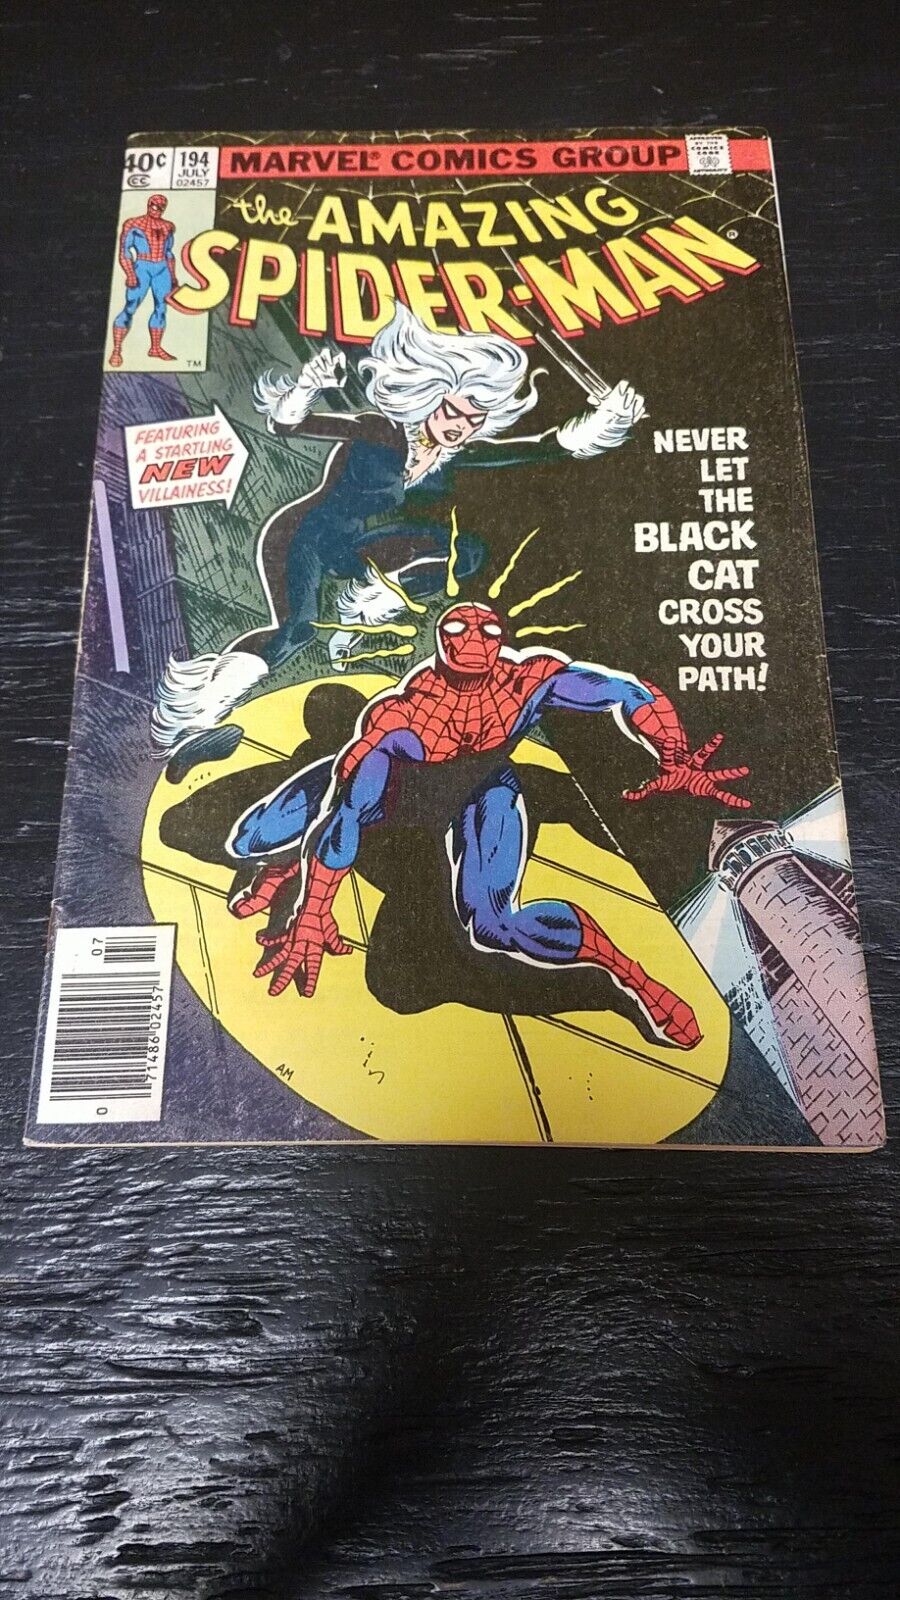 1979 MARVEL COMIC AMAZING SPIDERMAN 194 FN 1ST APP BLACK CAT VINTAGE KEY ISSUE